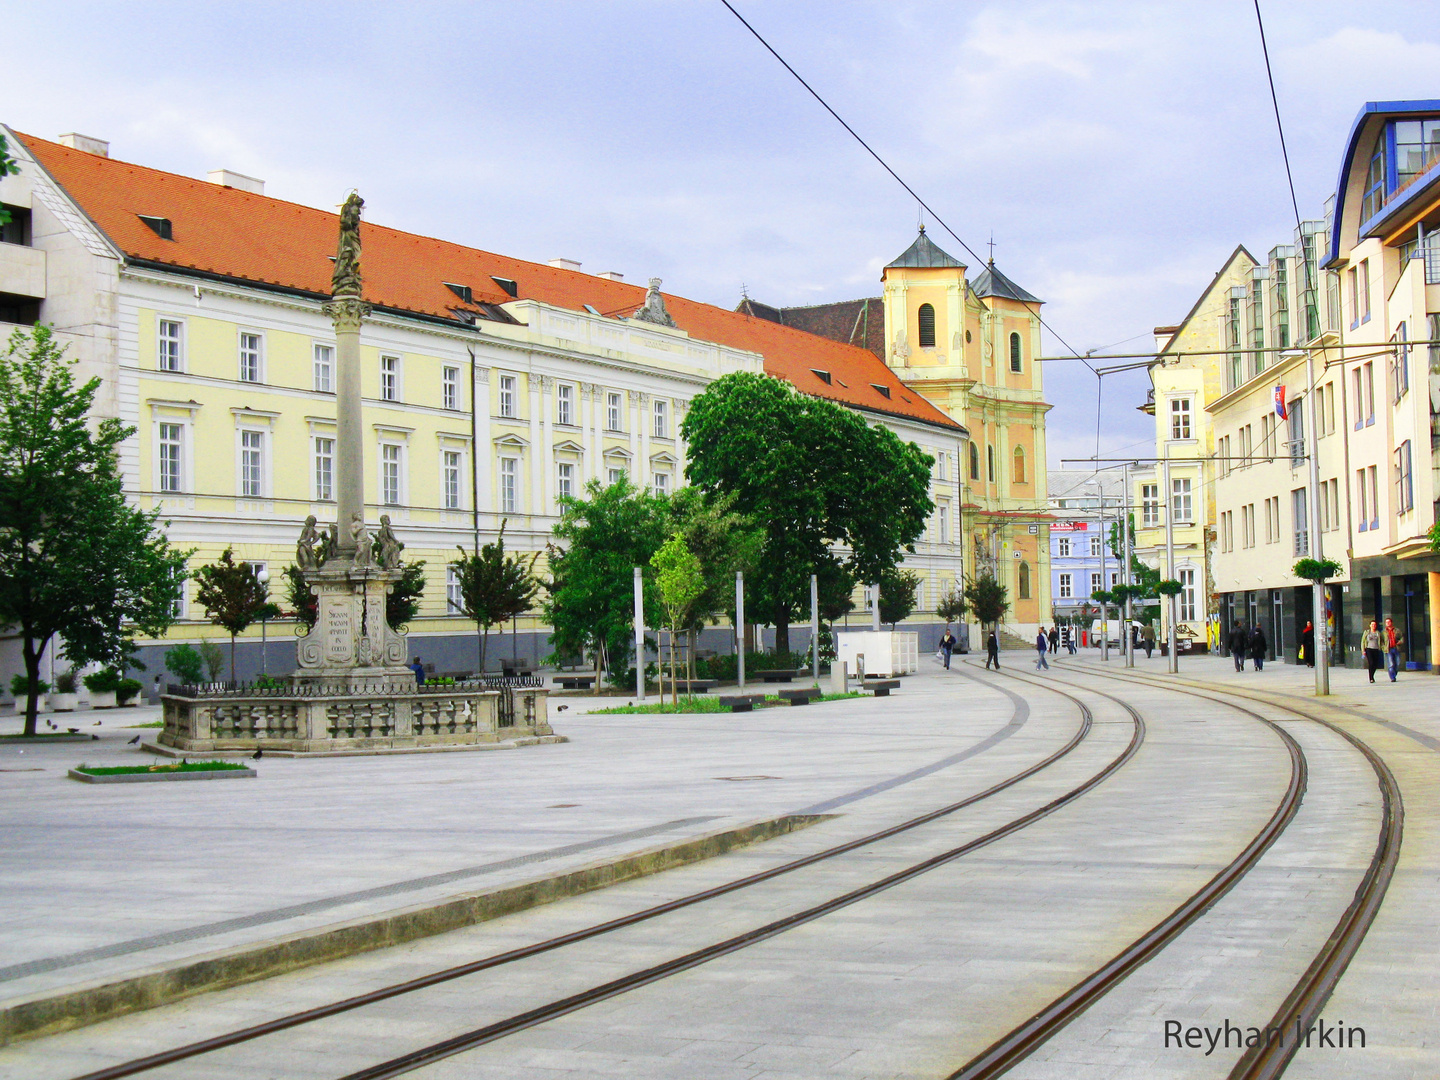 A street from Slovakia